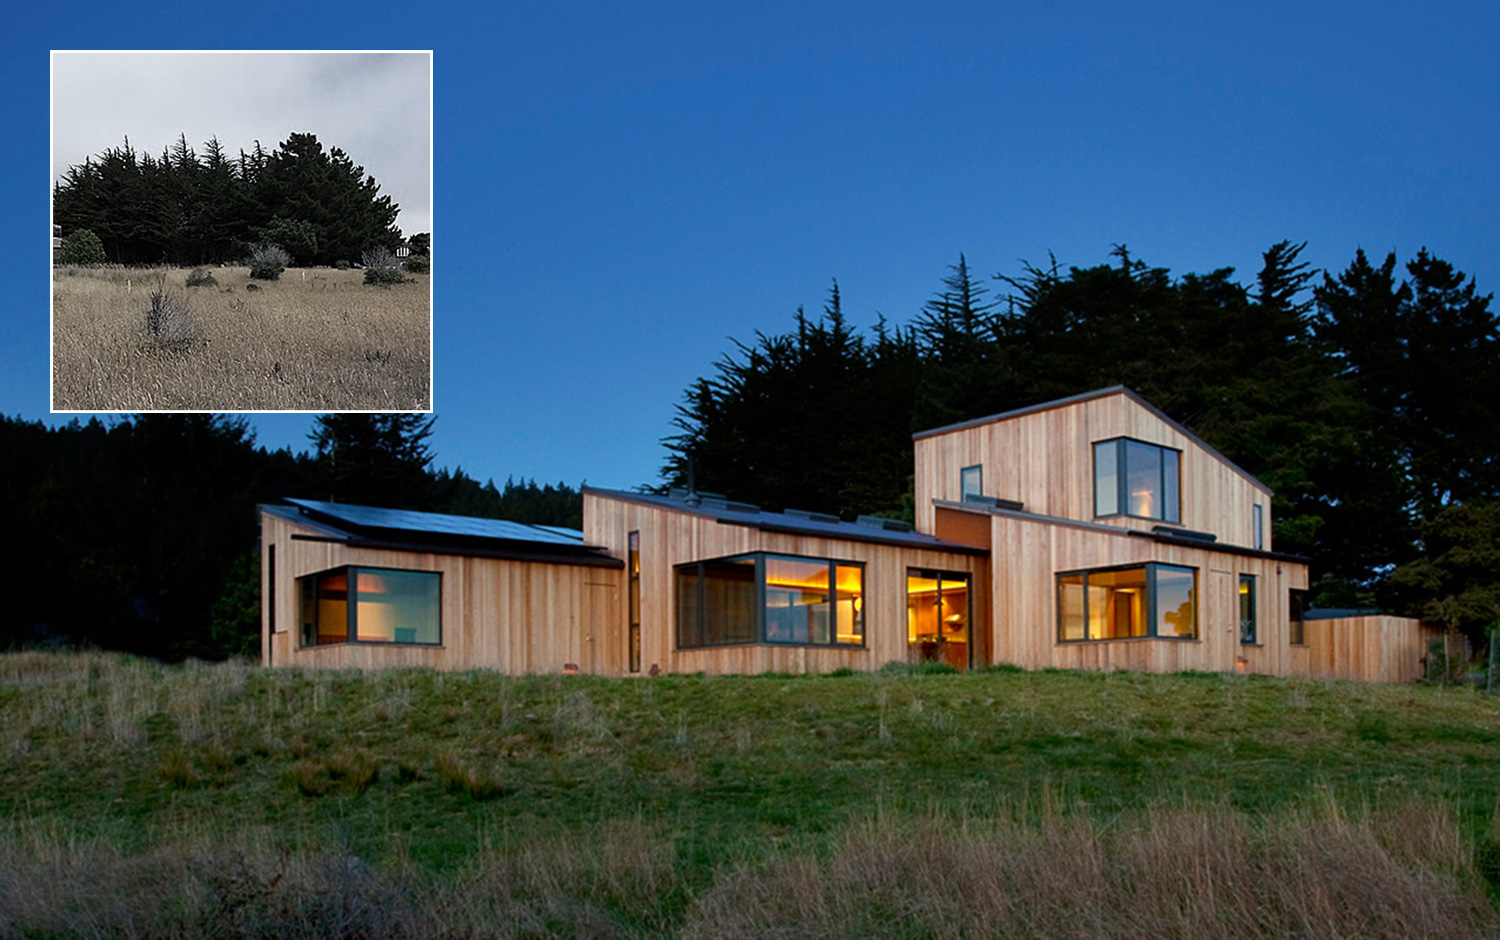 The Sea Ranch - Studio Bergtraun Architects